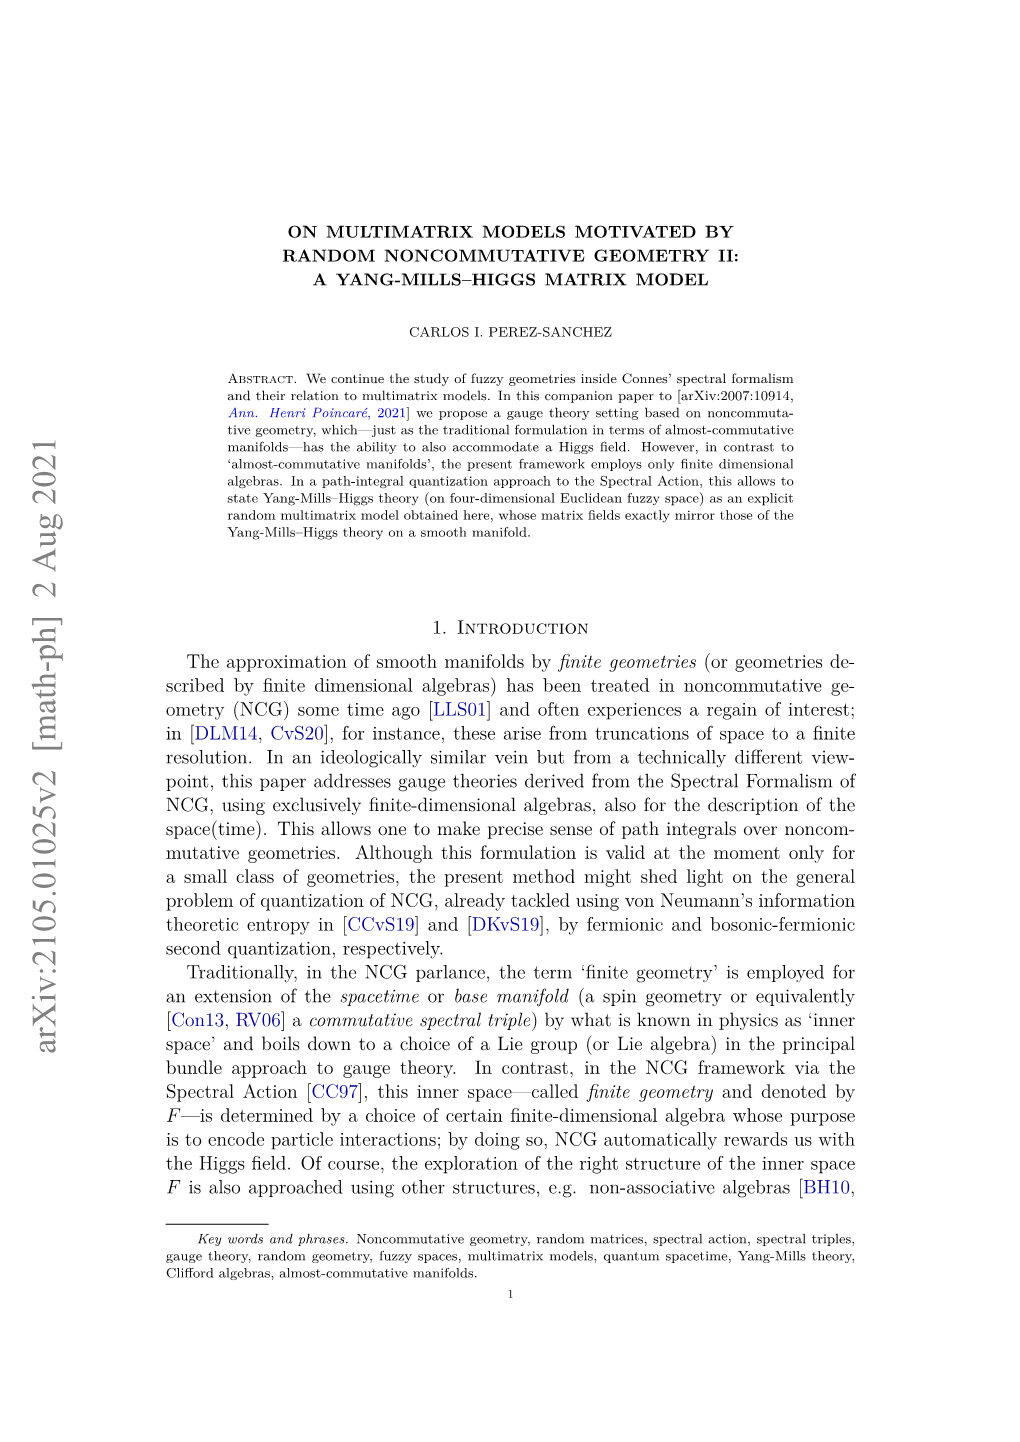 On Multimatrix Models Motivated by Random Noncommutative Geometry Ii: a Yang-Mills–Higgs Matrix Model